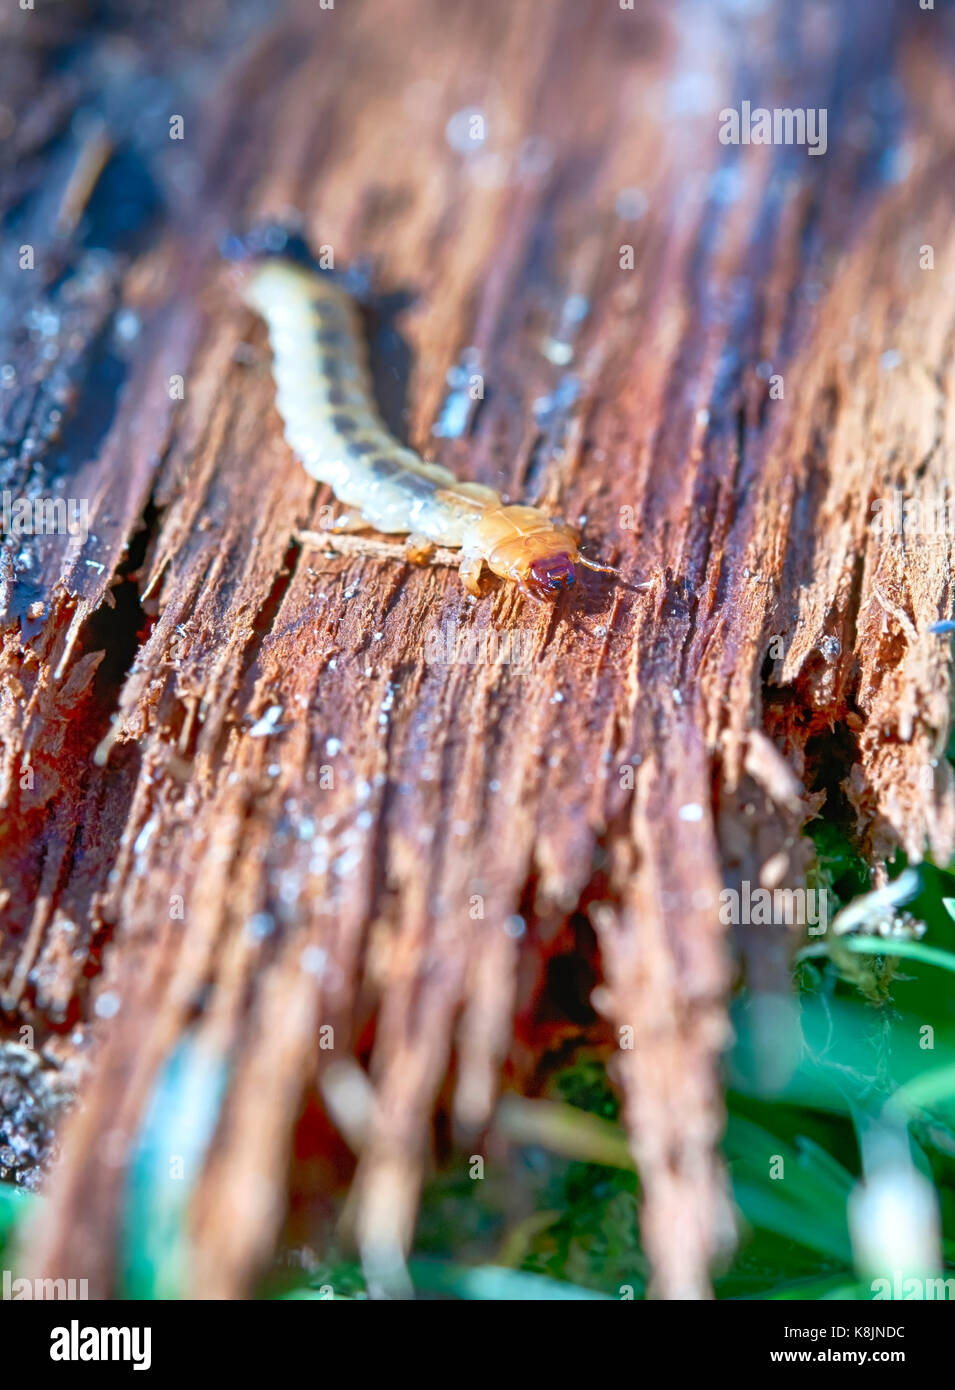 little woodworm lies on tree Stock Photo